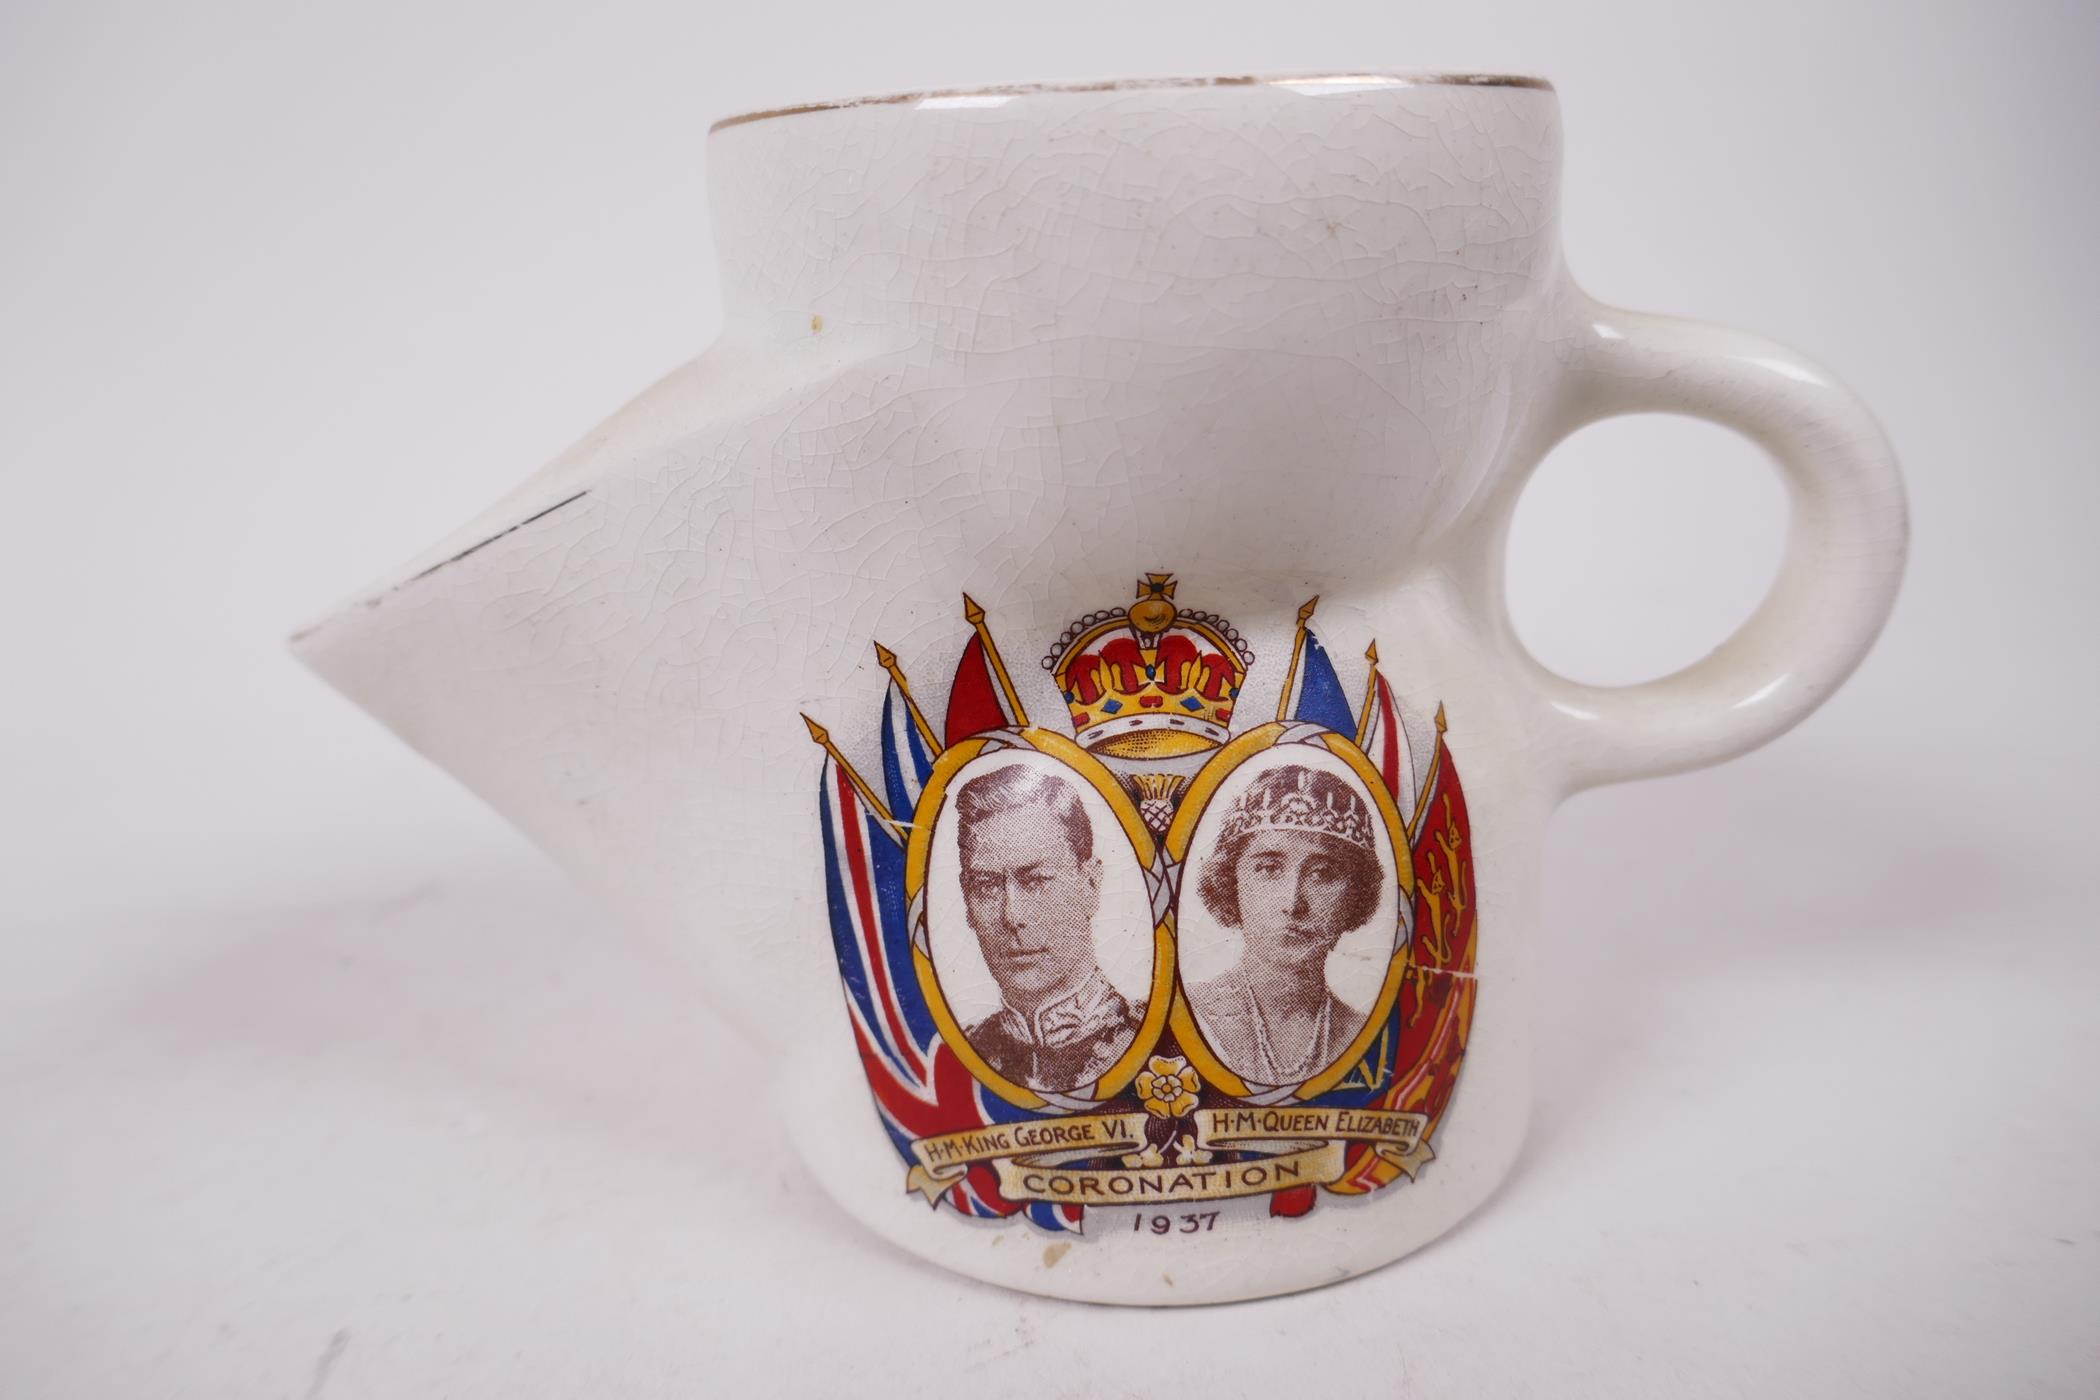 Three 1937 commemorative coronation shaving mugs, cream and white glazed ceramic - Image 6 of 11